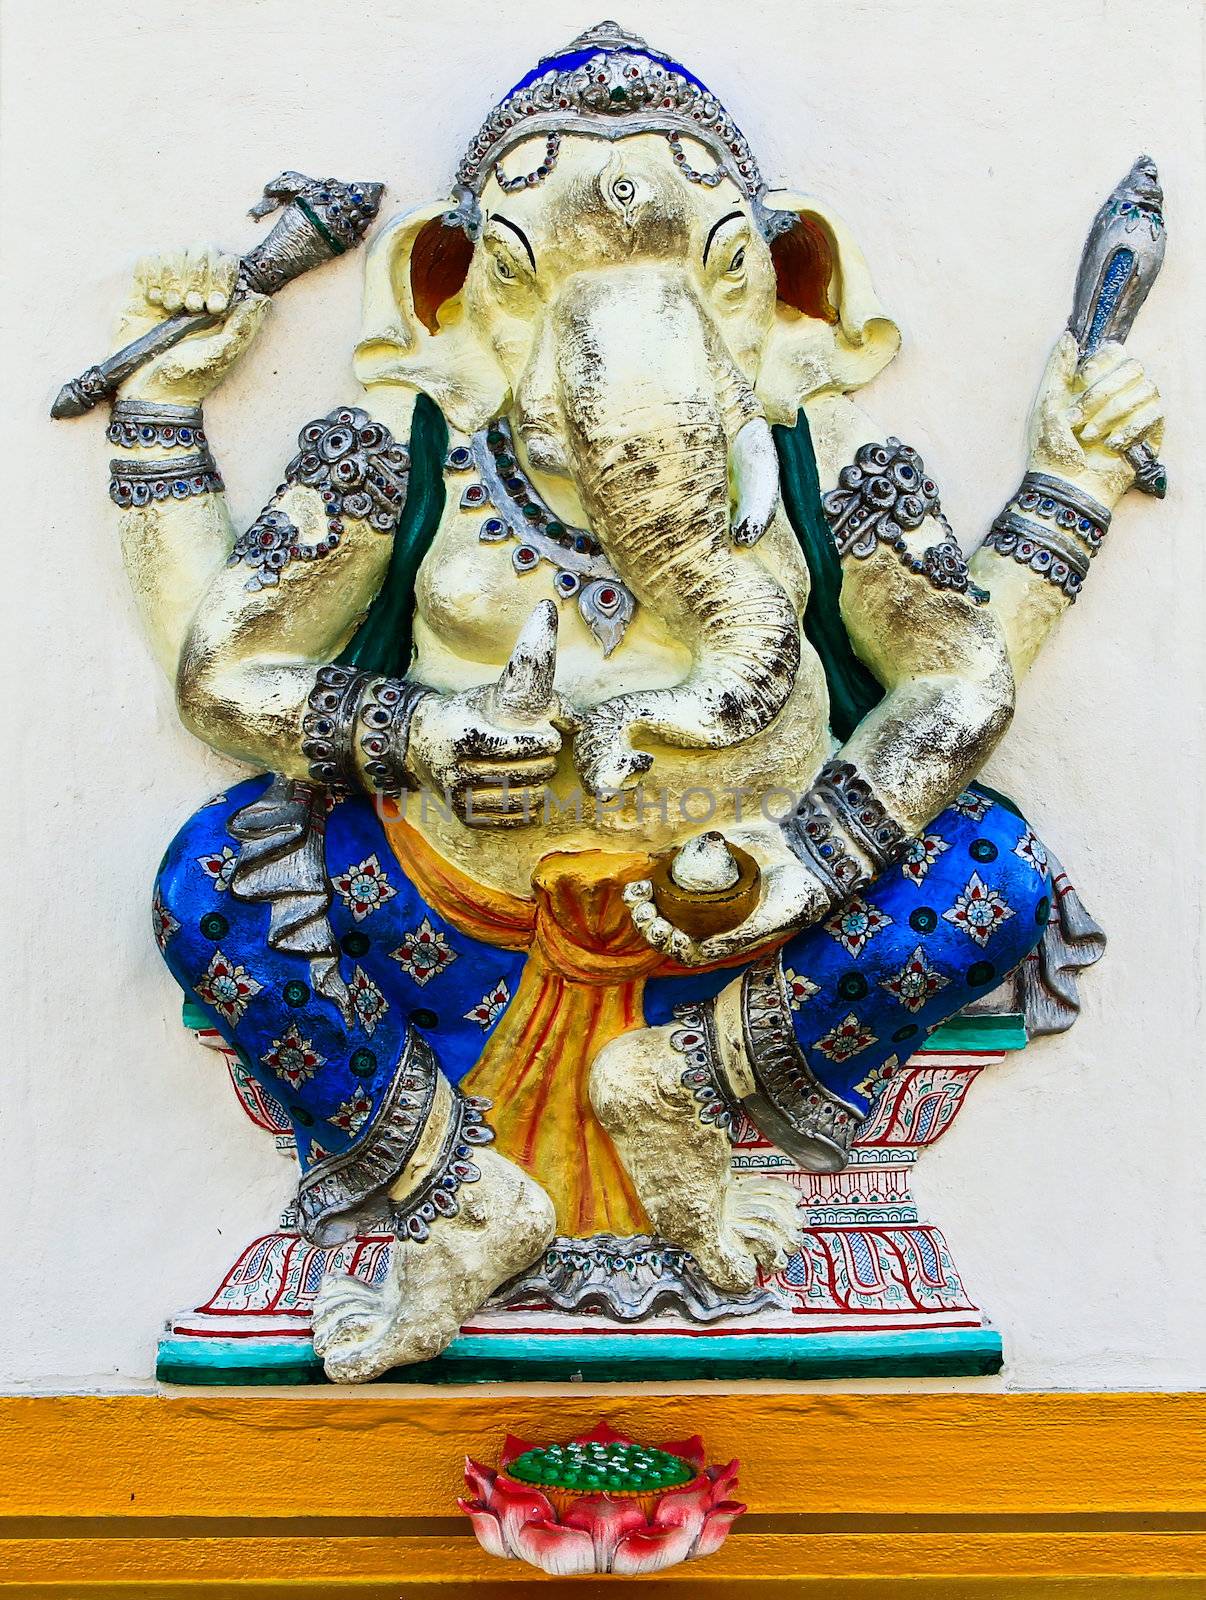 Ganesh Elephant-headed god Chachoengsao, Thailand by Photoguide